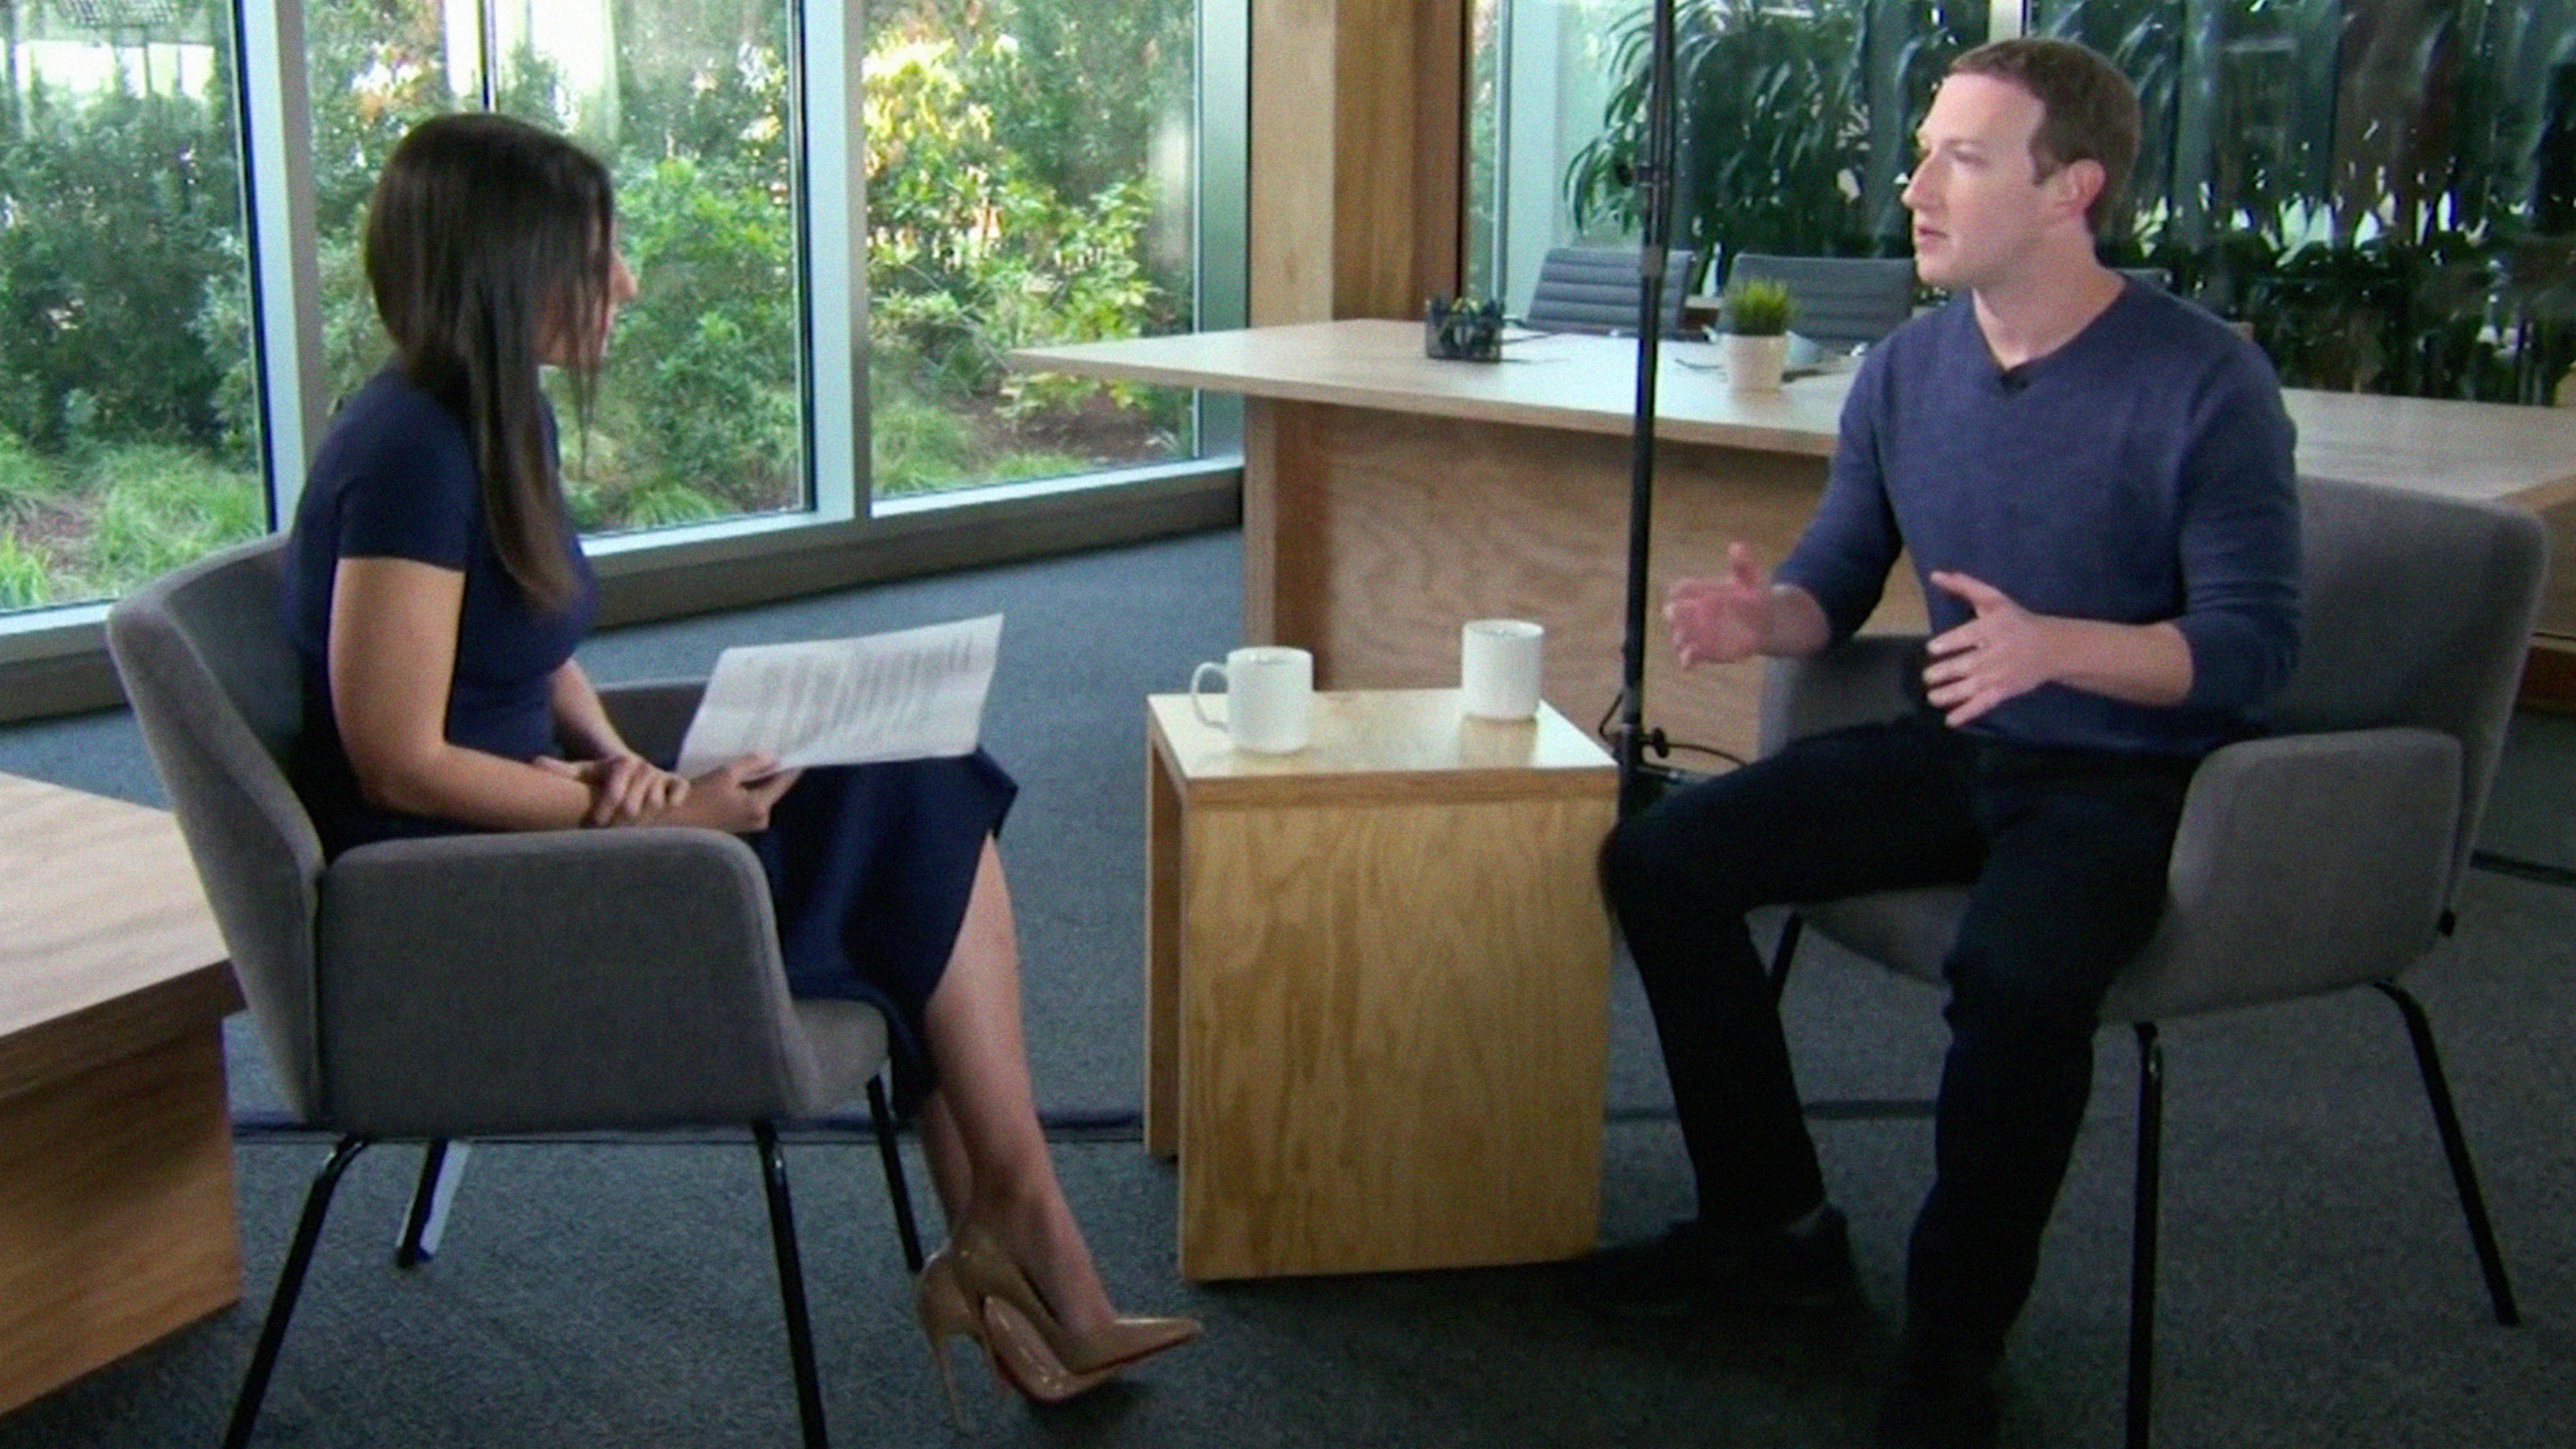 On CNN, Mark Zuckerberg scrambles to rebuild trust